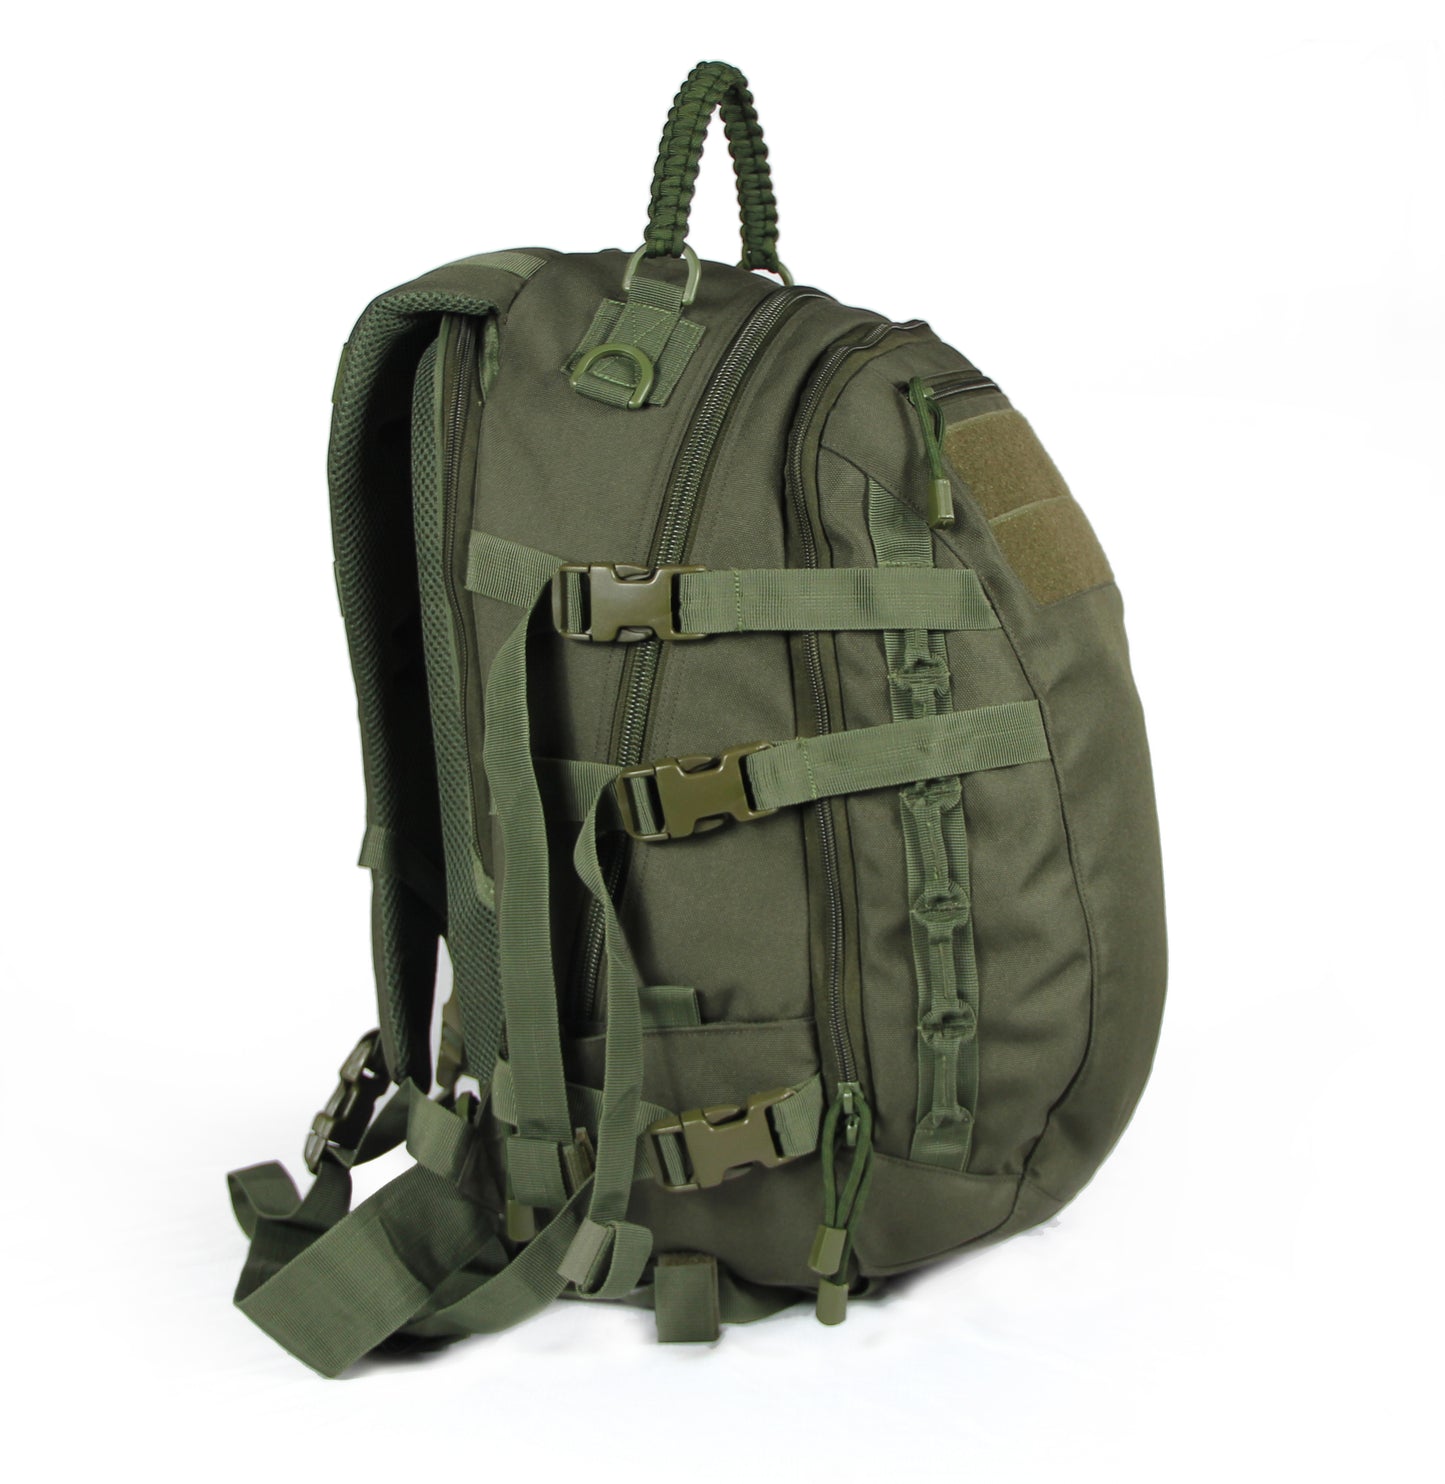 Defence Olive Backpack 40L capacity